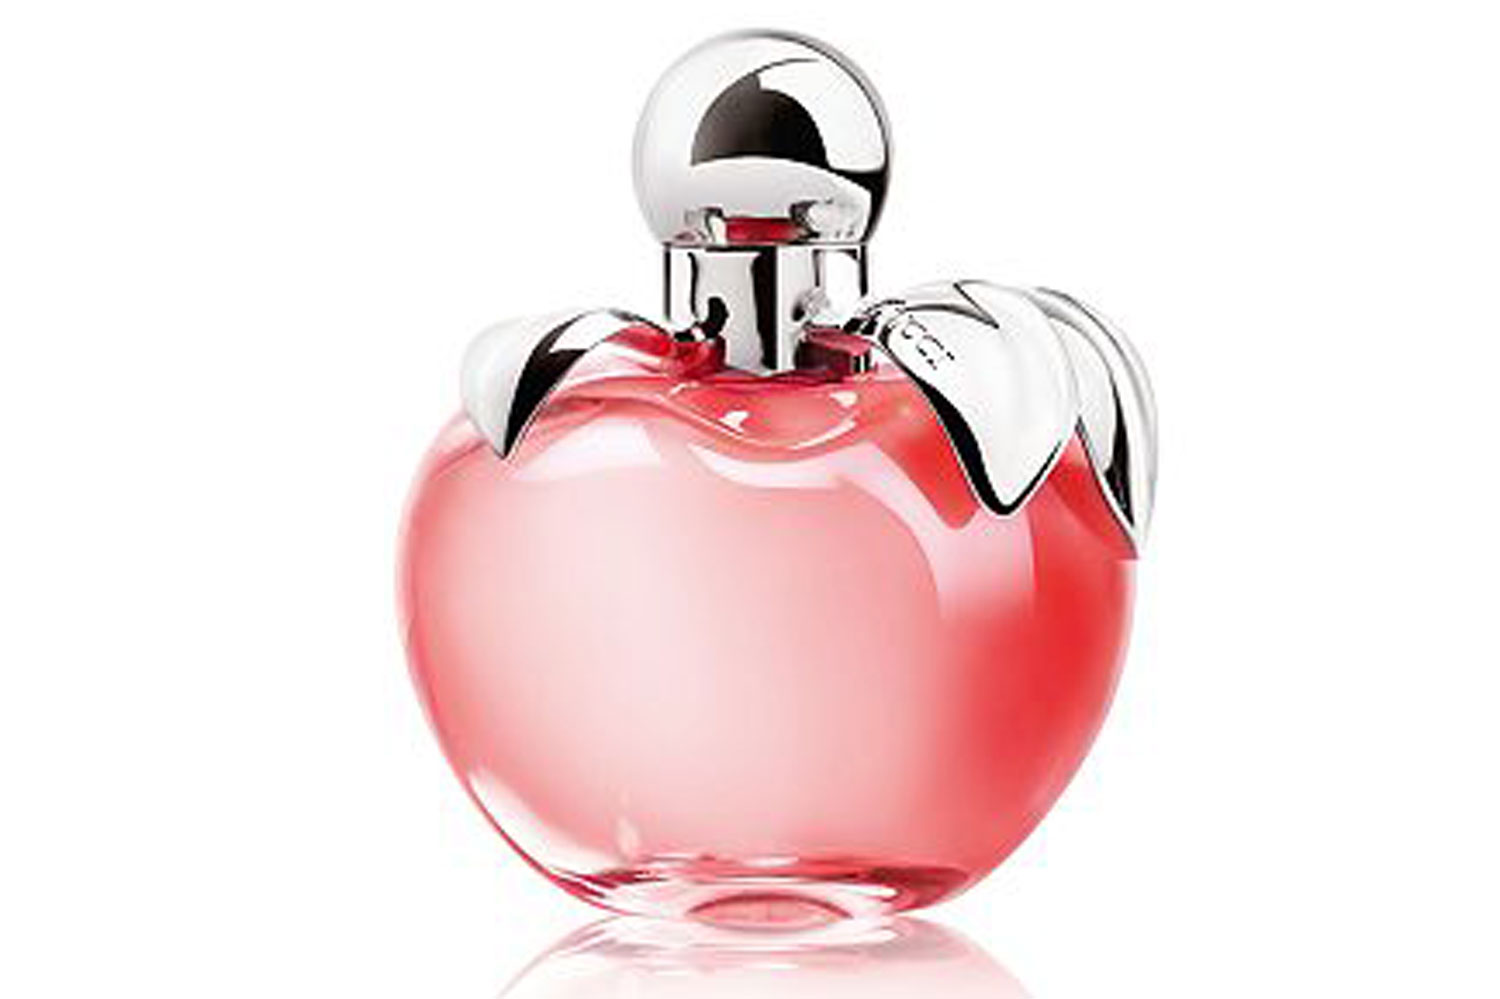 French perfume